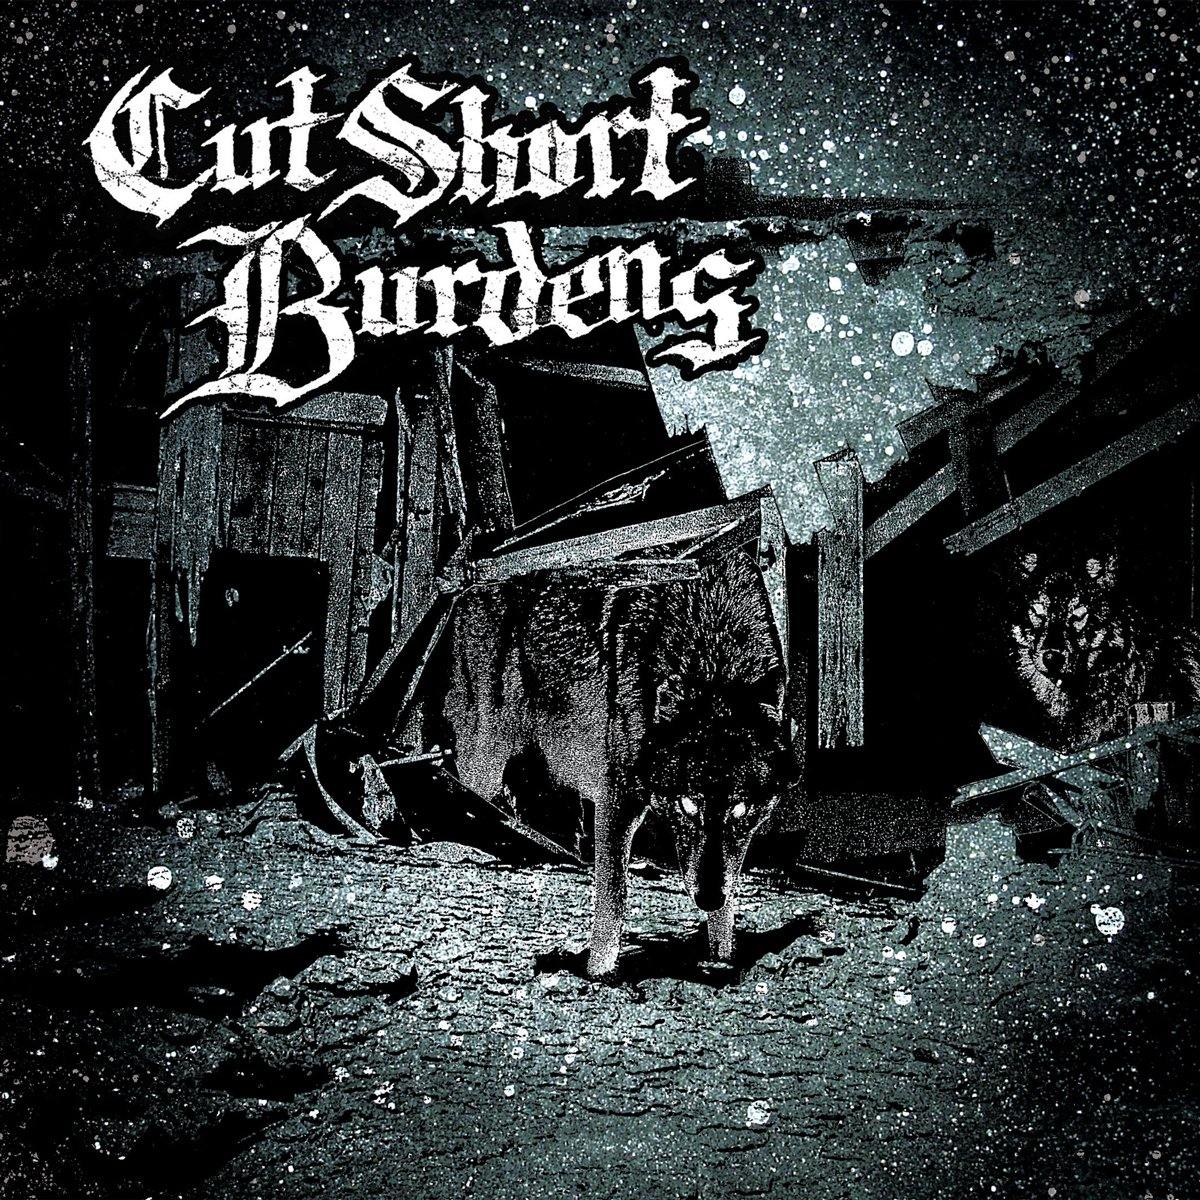 Buy – Cut Short/Burdens split Digital Download – Band & Music Merch – Cold Cuts Merch